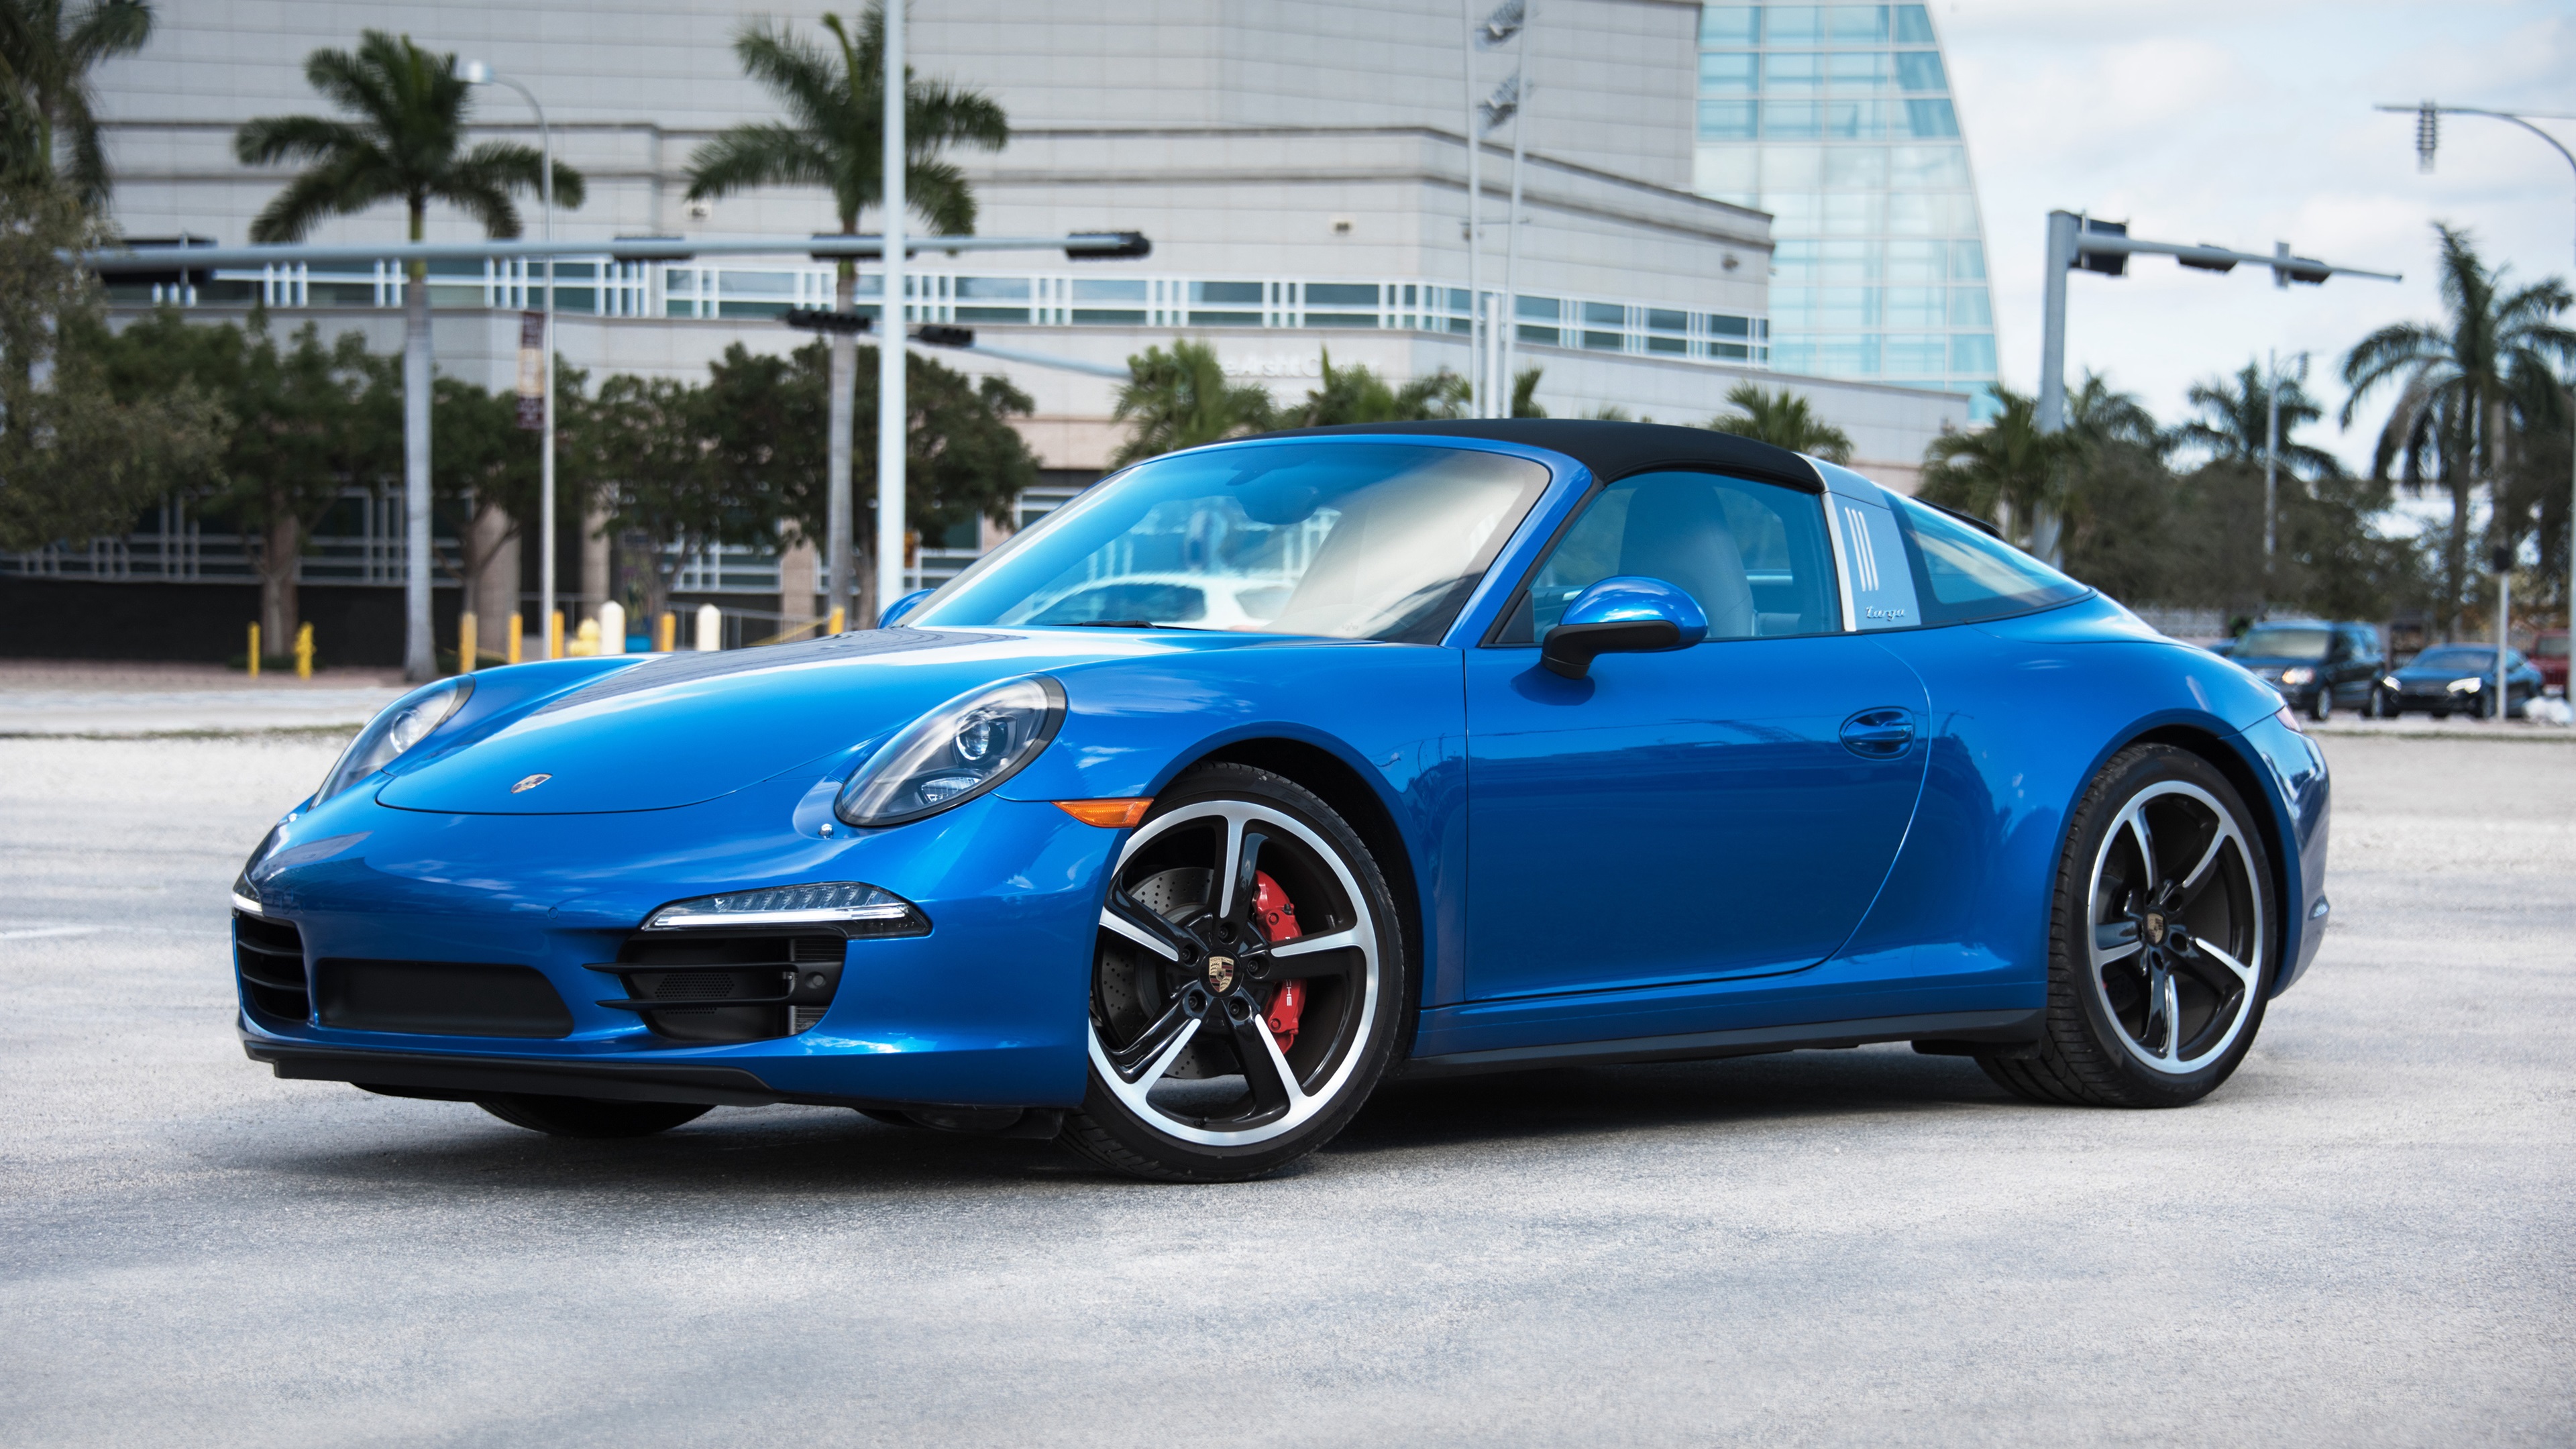 Porsche 911 Targa 4S blue supercar side view wallpaper ...